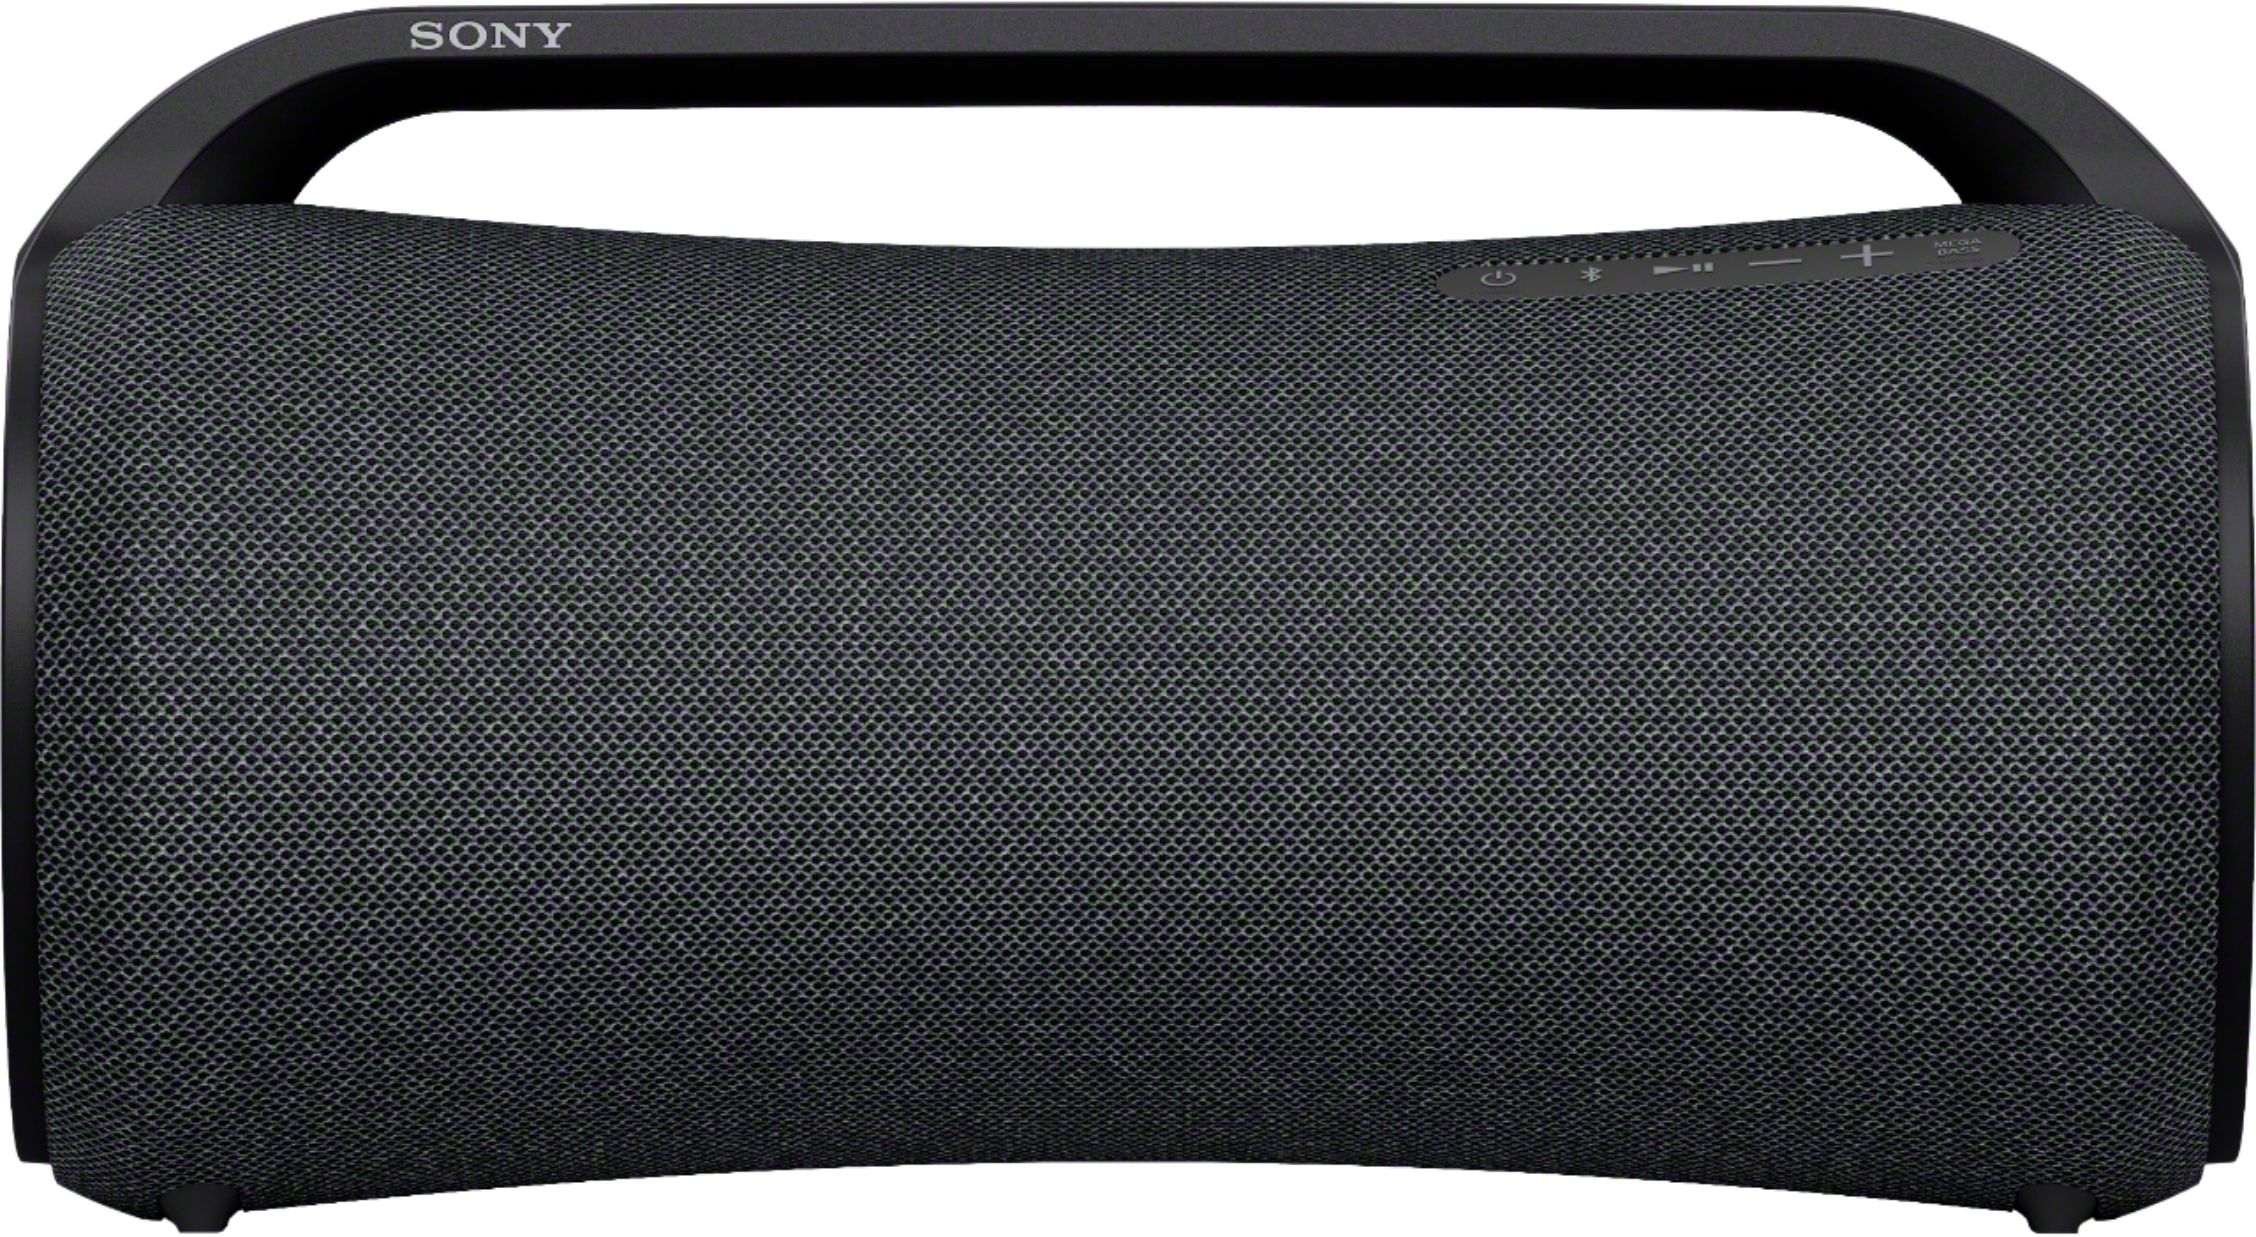 Sony XG500 Portable Bluetooth Speaker Best Buy - SRSXG500 Black